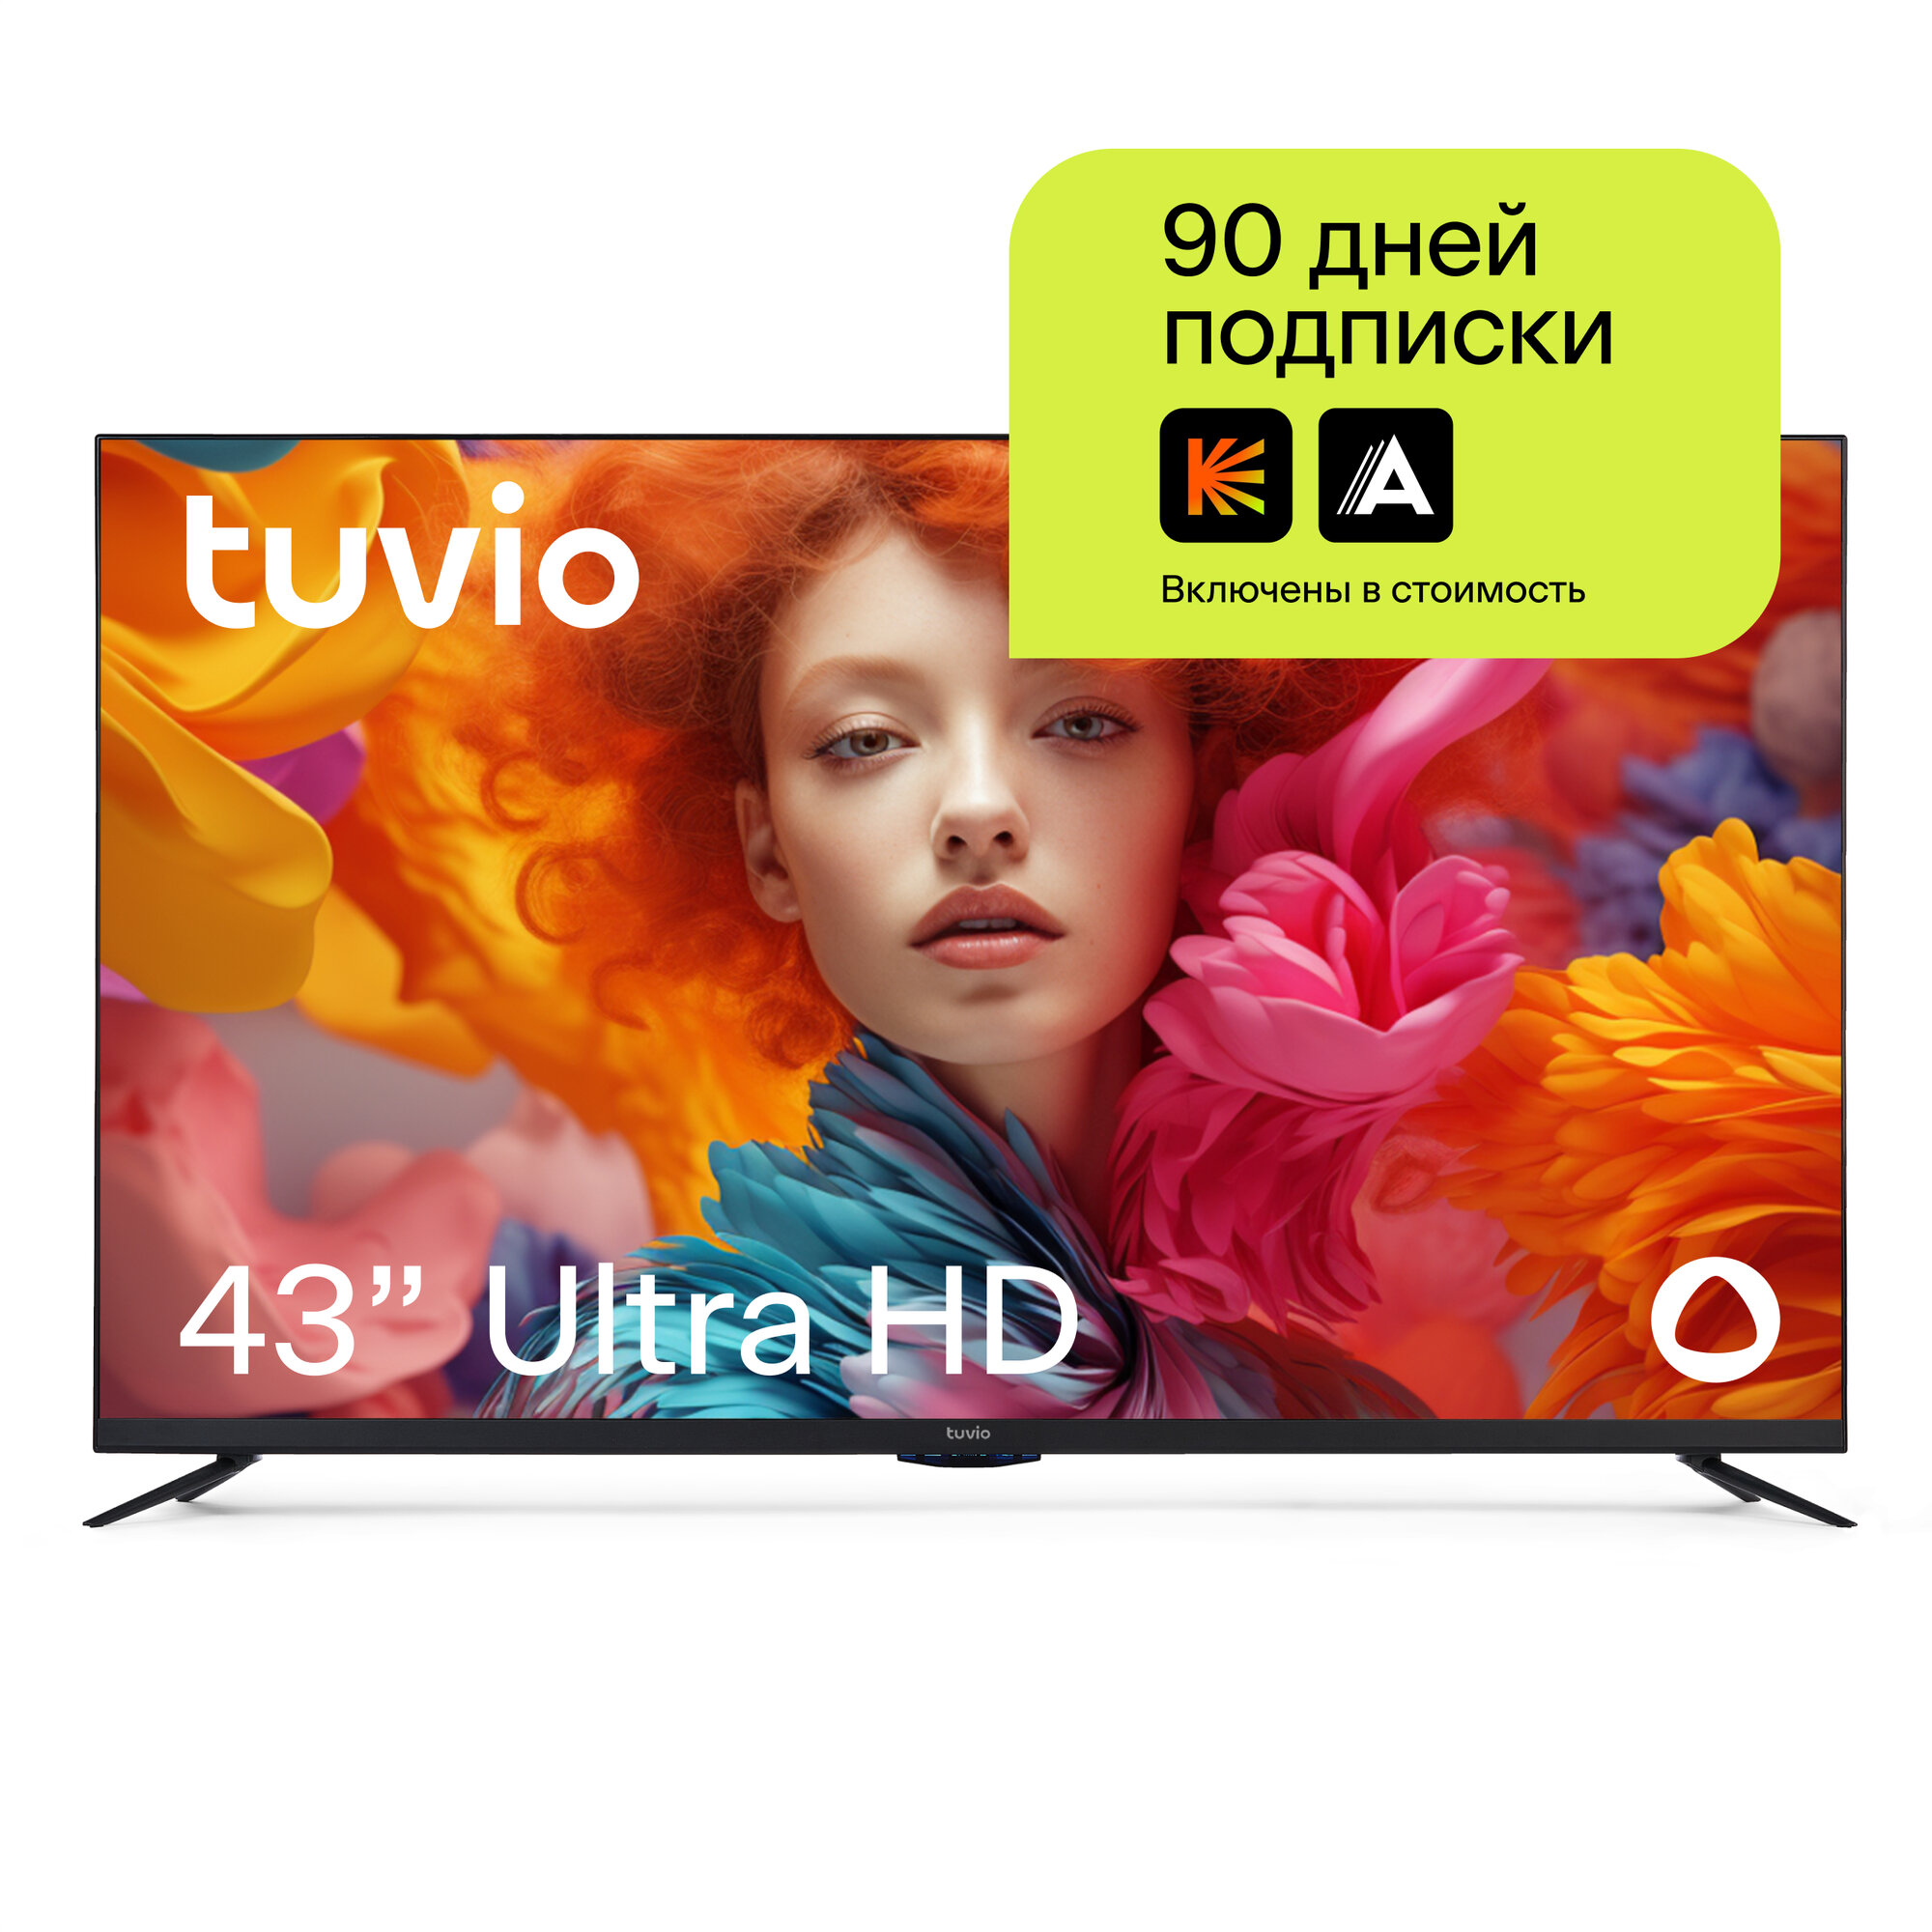 43” Телевизор Tuvio 4К ULTRA HD DLED на платформе Яндекс.ТВ STV-43FDUBK1R черный